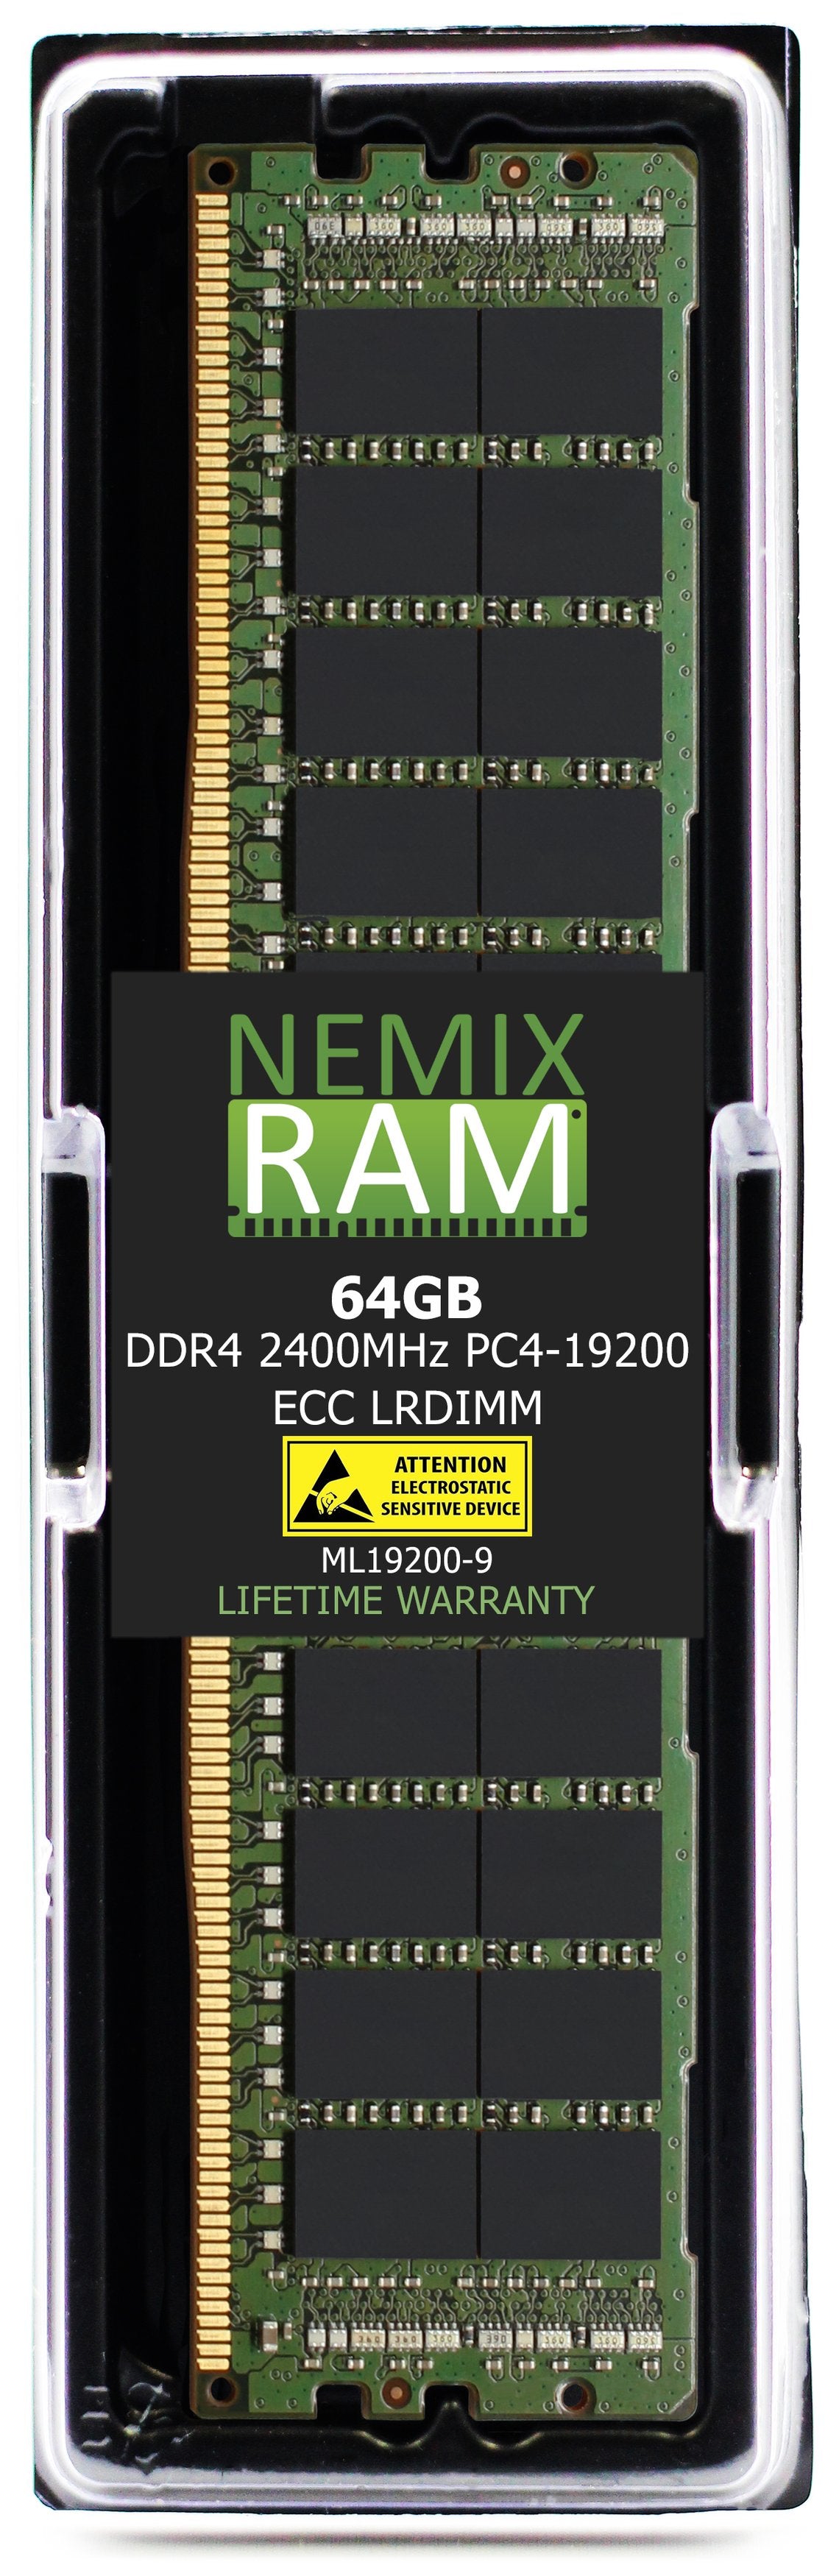 NEC Express5800 B120g-h Memory Module N8402-174F 64GBDDR4 2400MHZ PC4-19200 LRDIMM